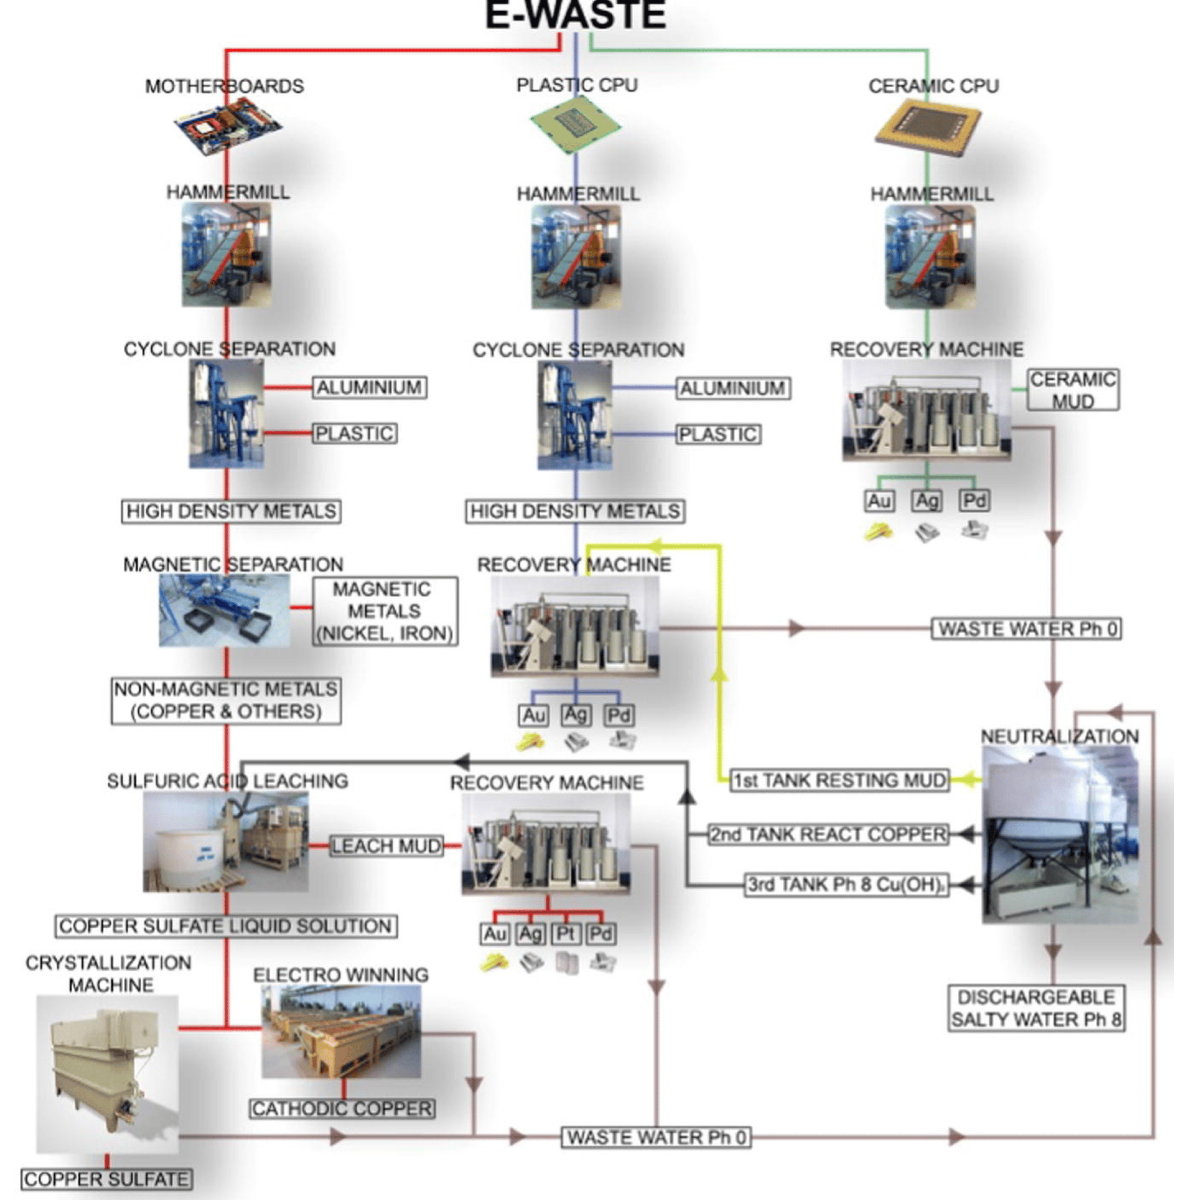 5 Maquinaria para reciclar electronicos desechos residuos placa